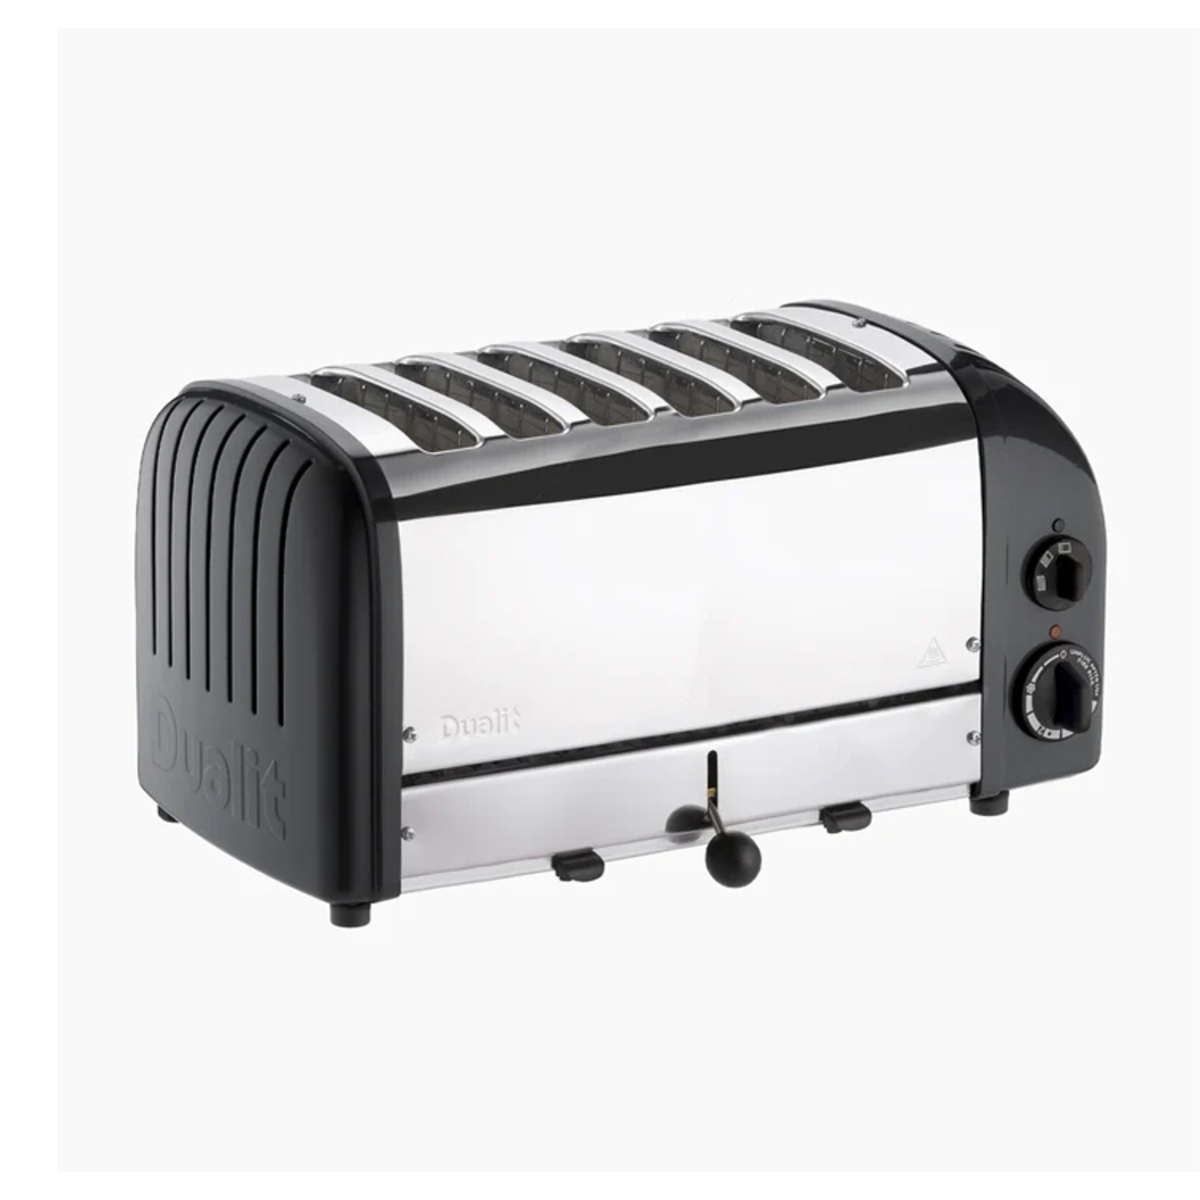 Dualit 60145 6 Slot Classic Toaster, Black